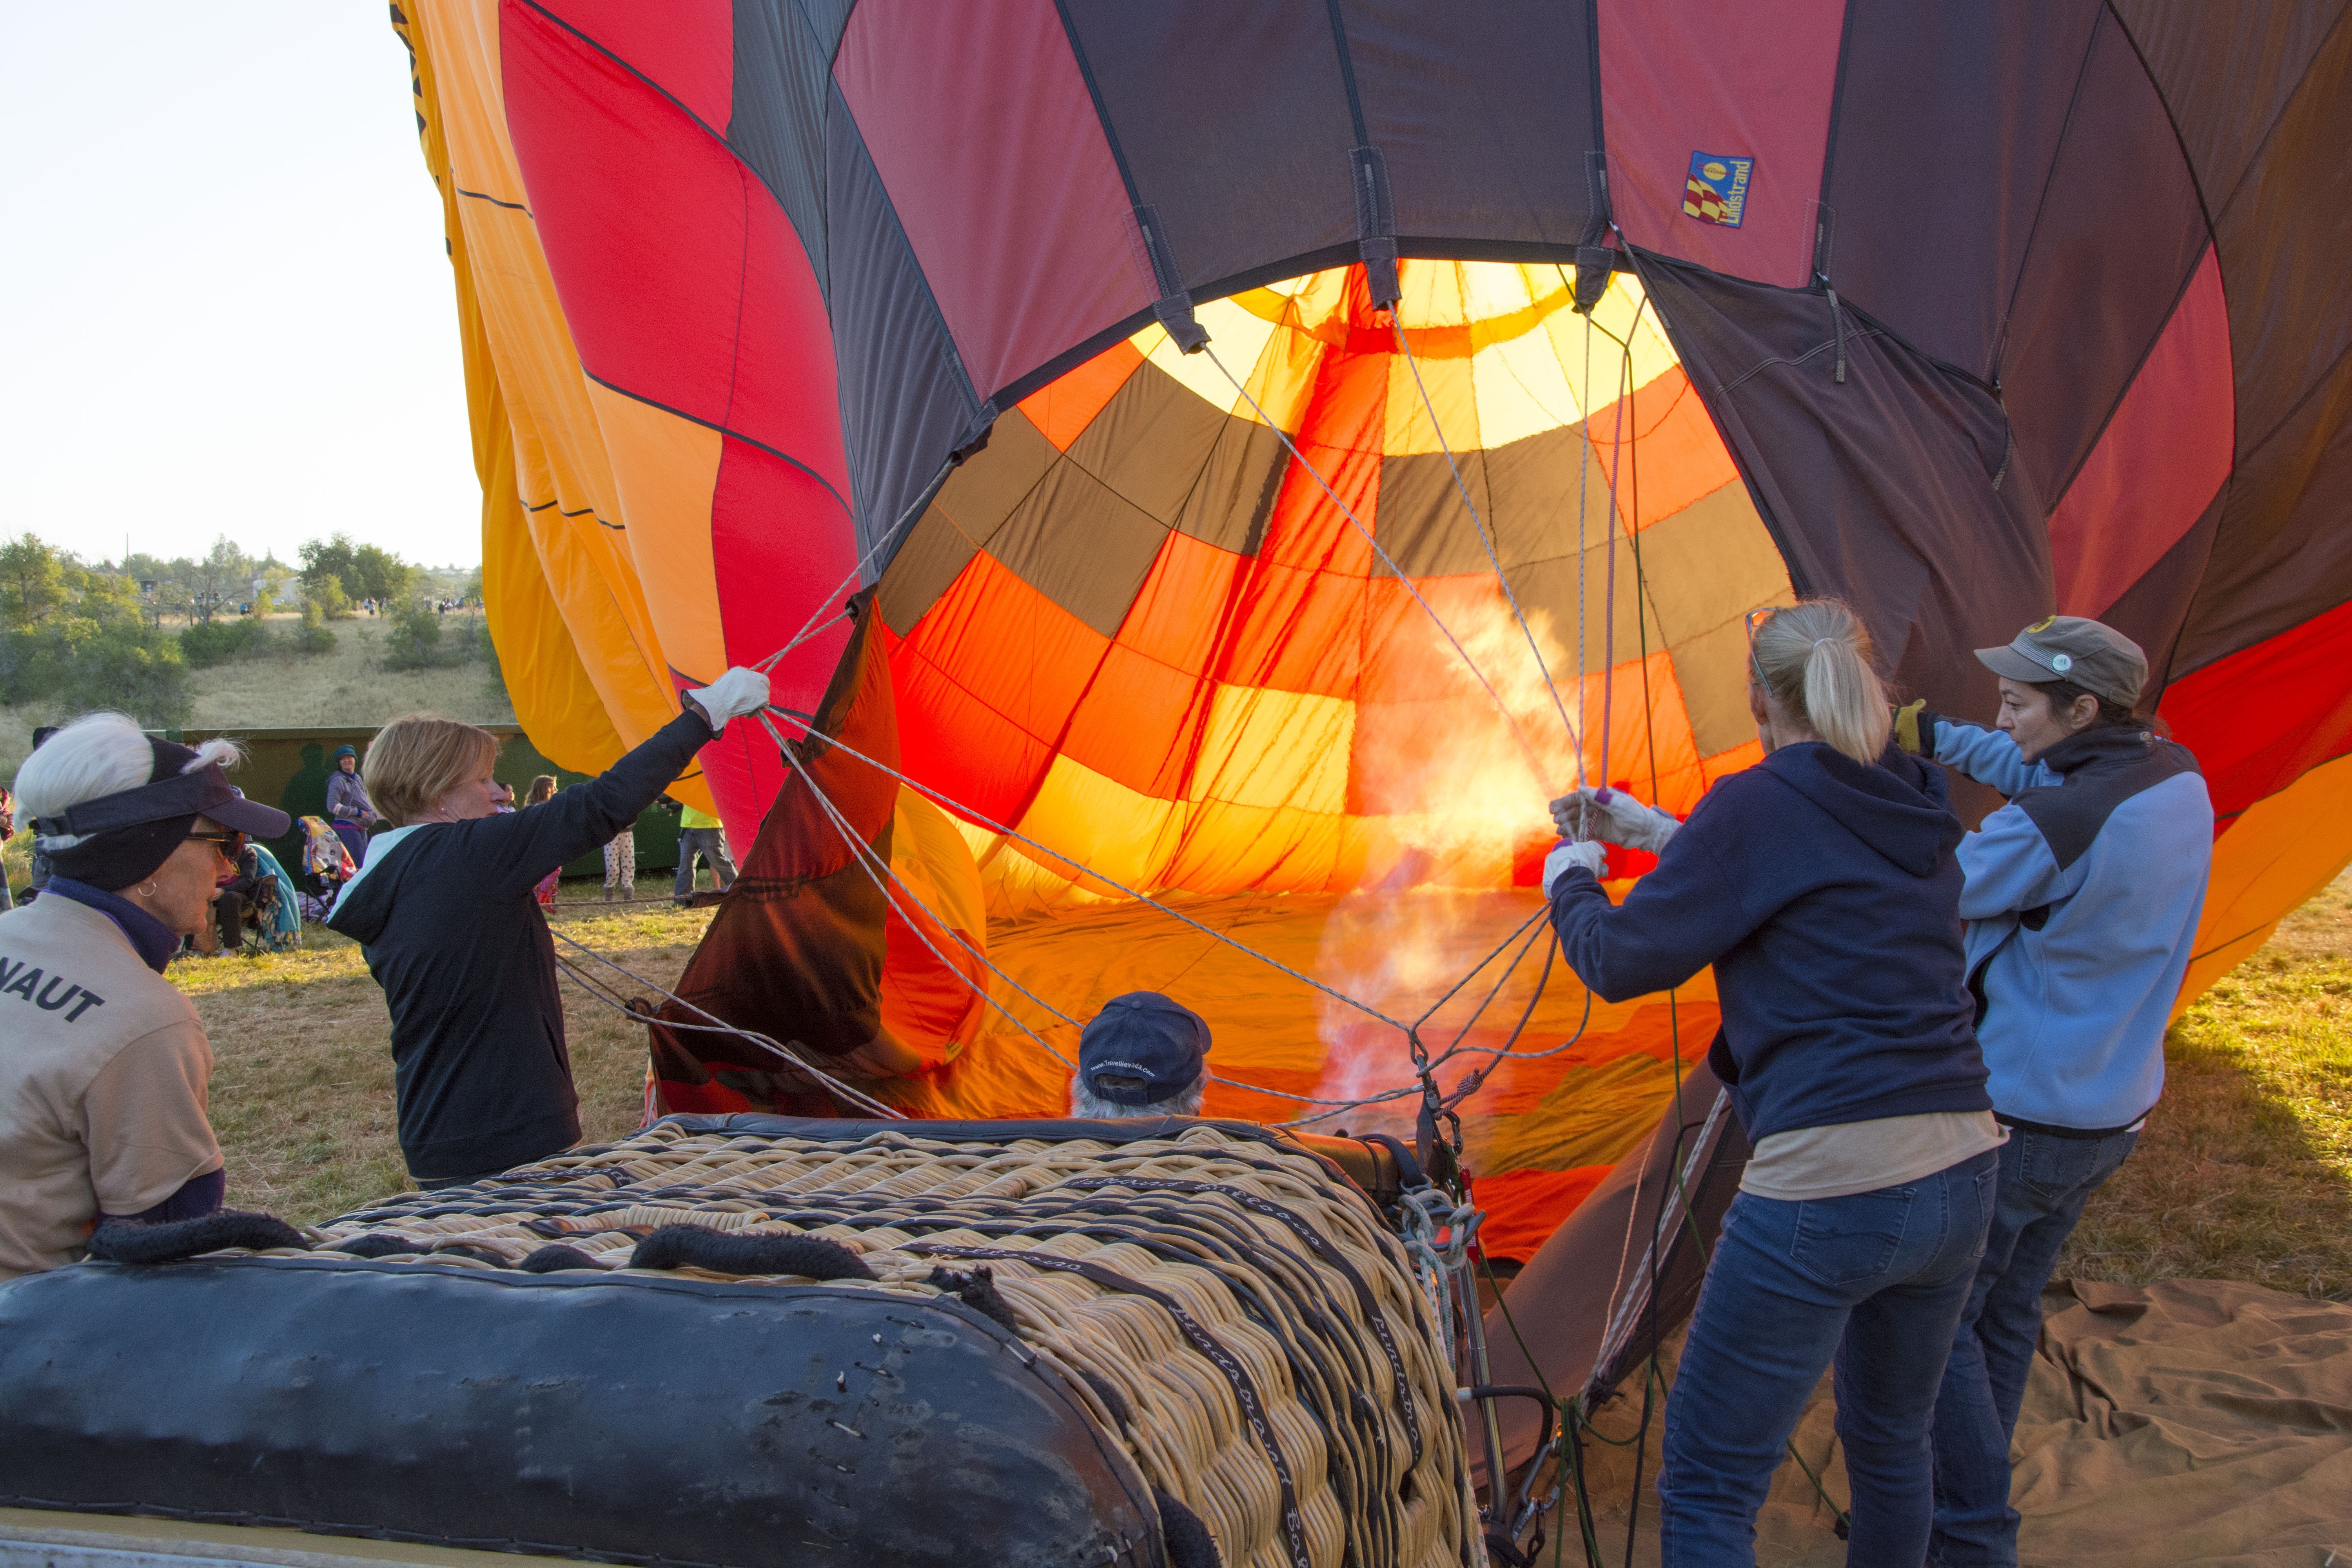 four person getting ready the hot air balloon